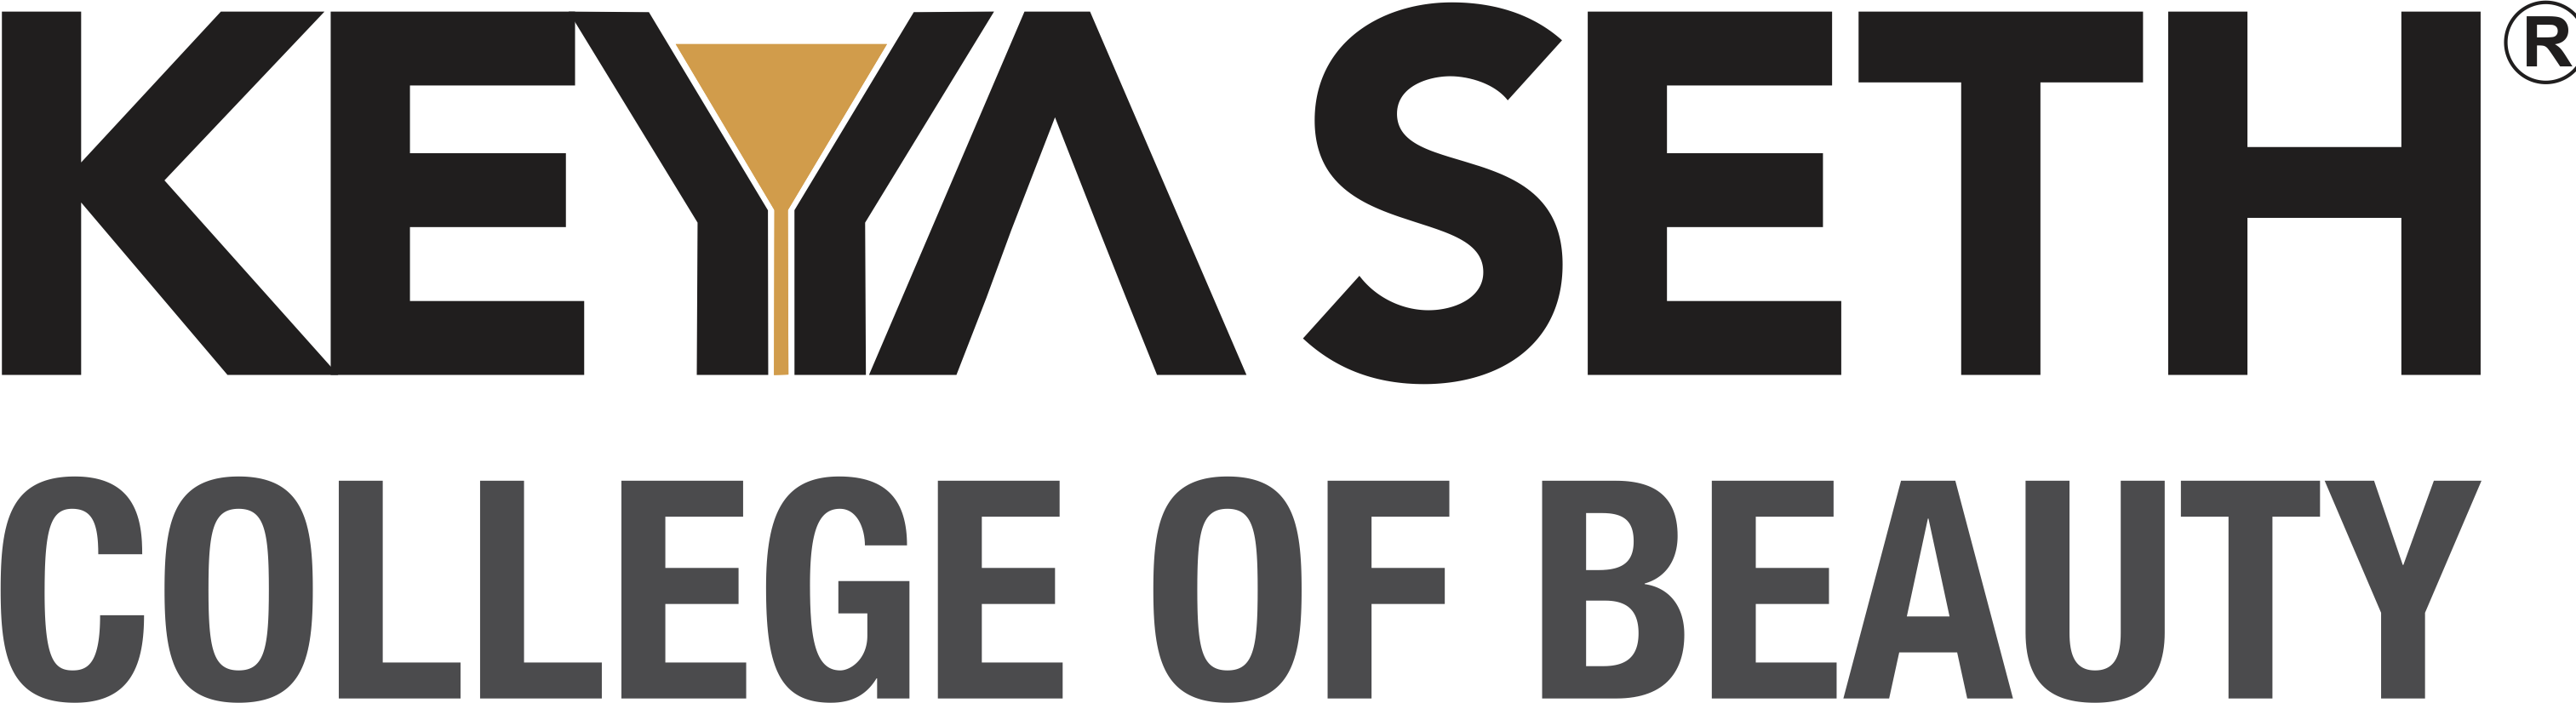 Keyaseth College Of Beauty Logo